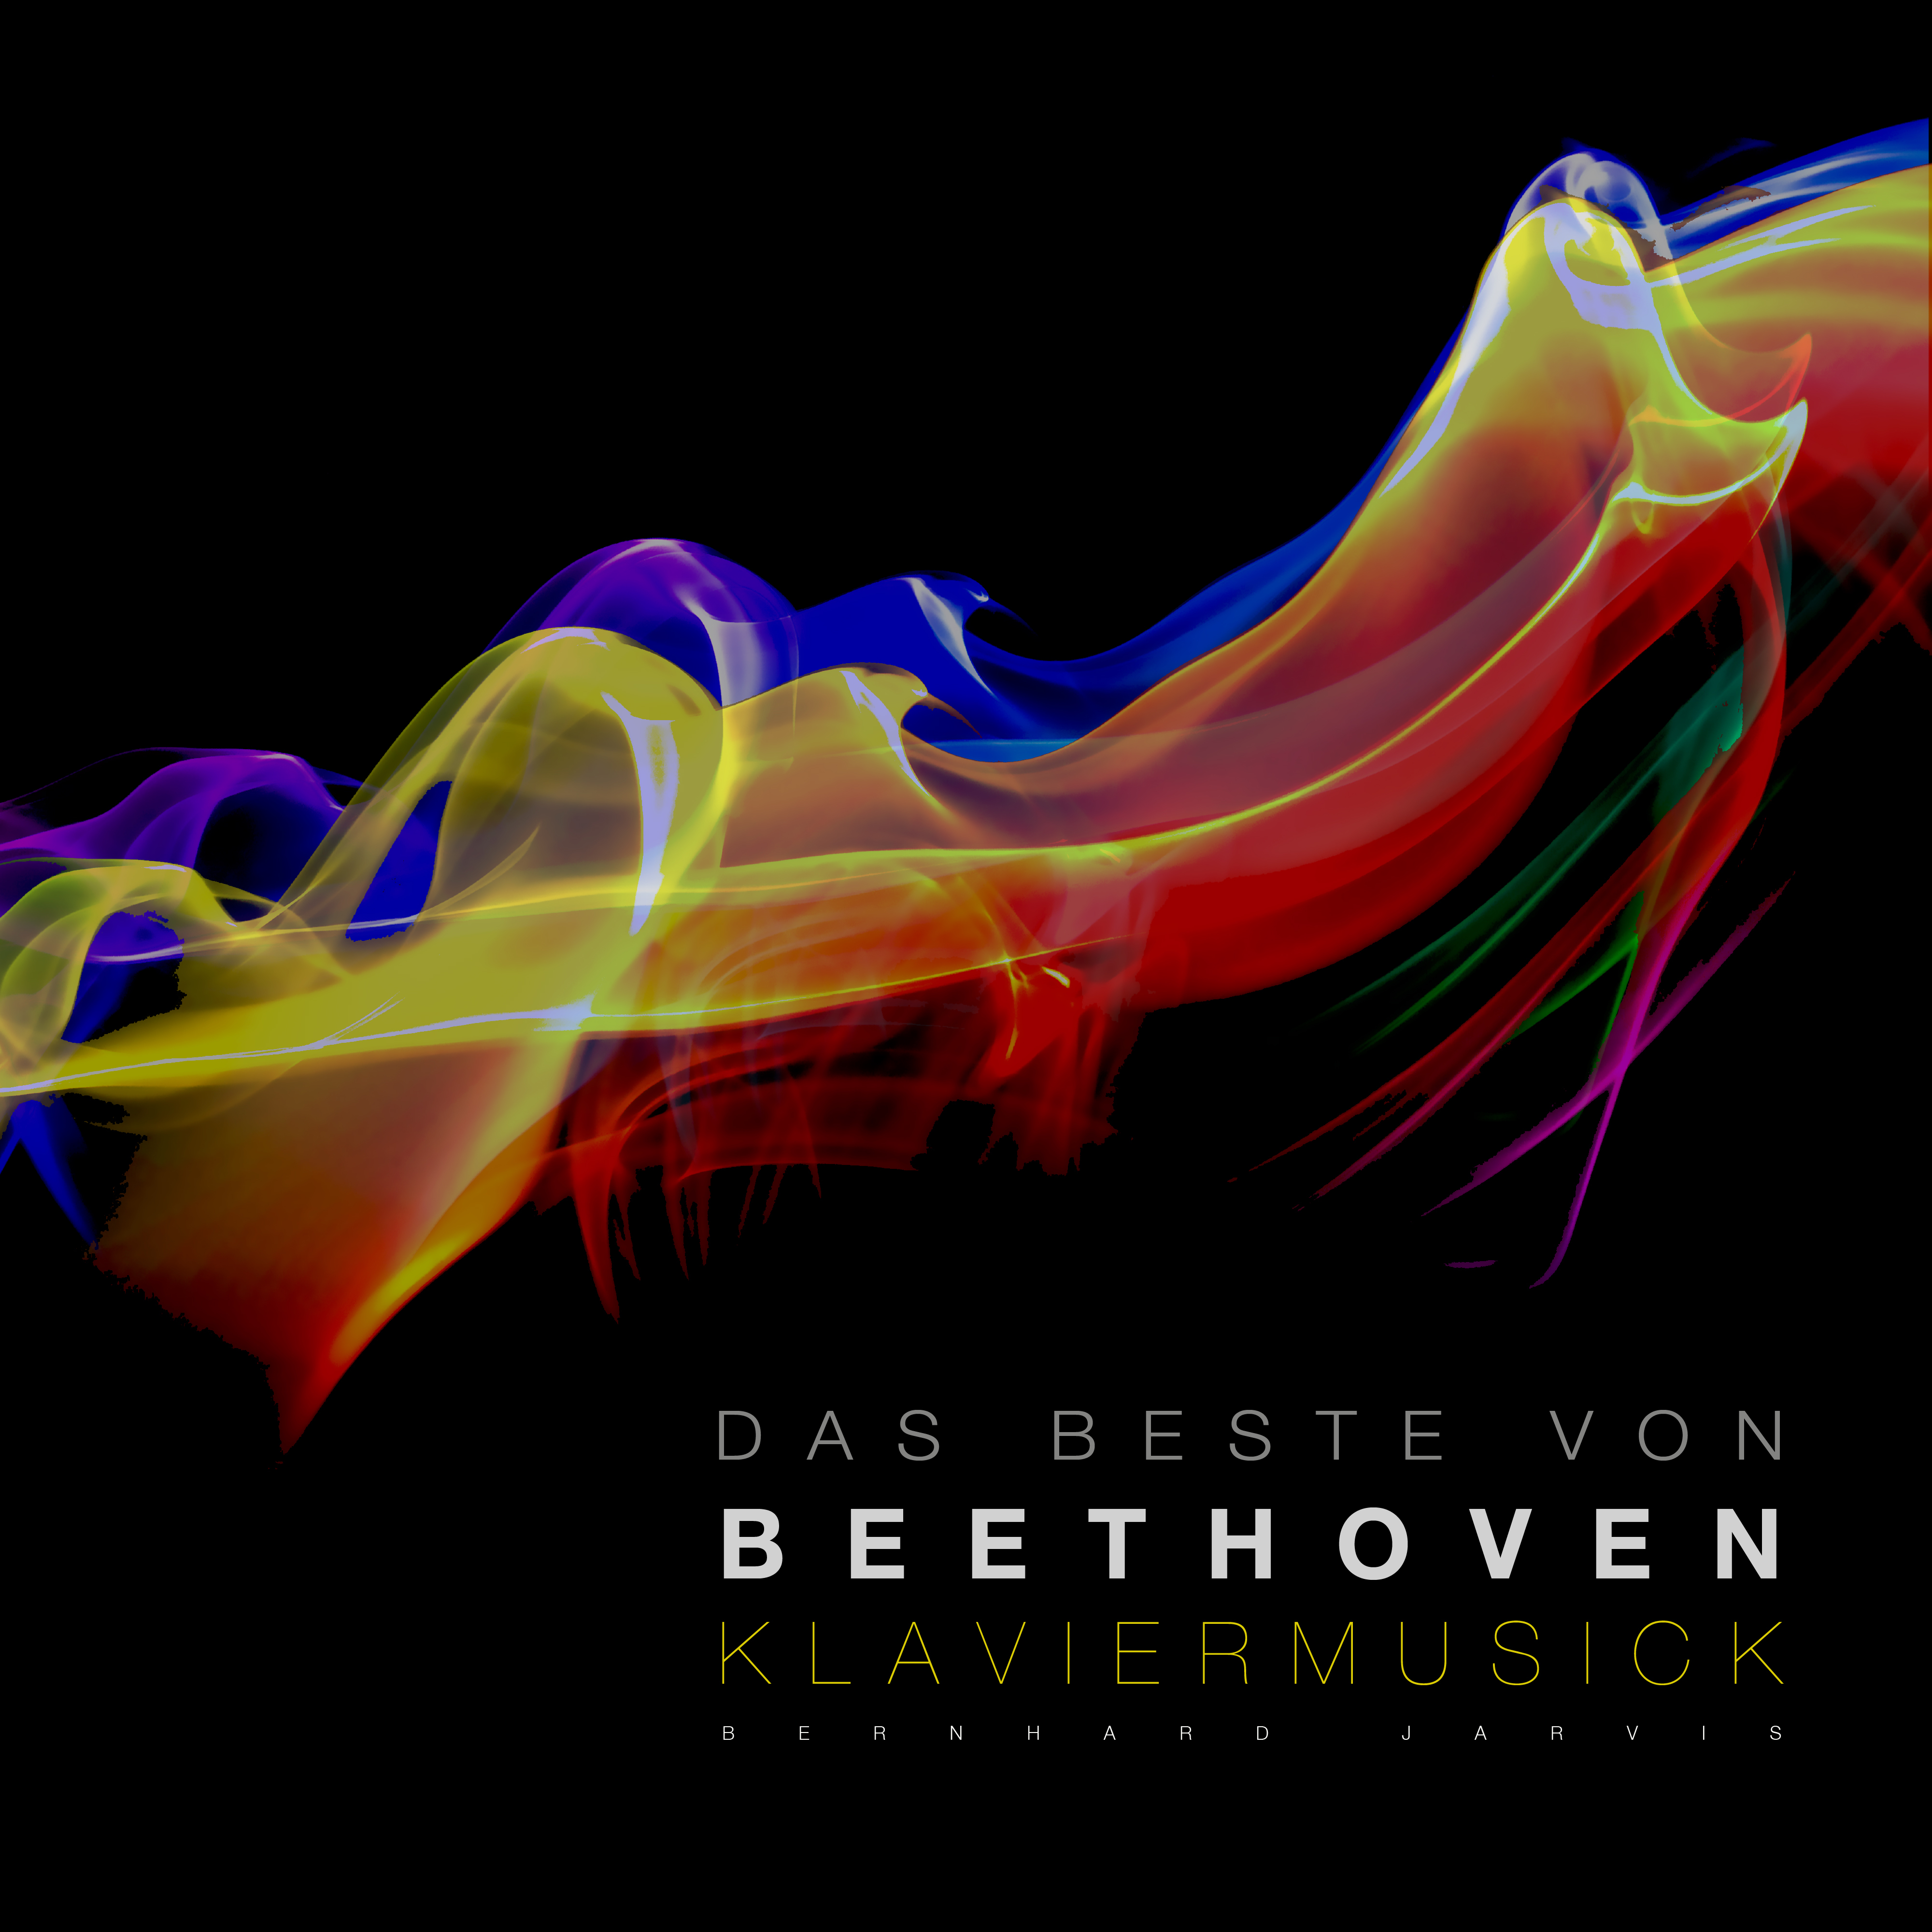 Das Beste von Beethoven Klaviermusik: Die gr ten Meisterwerke von Ludwig van Beethoven